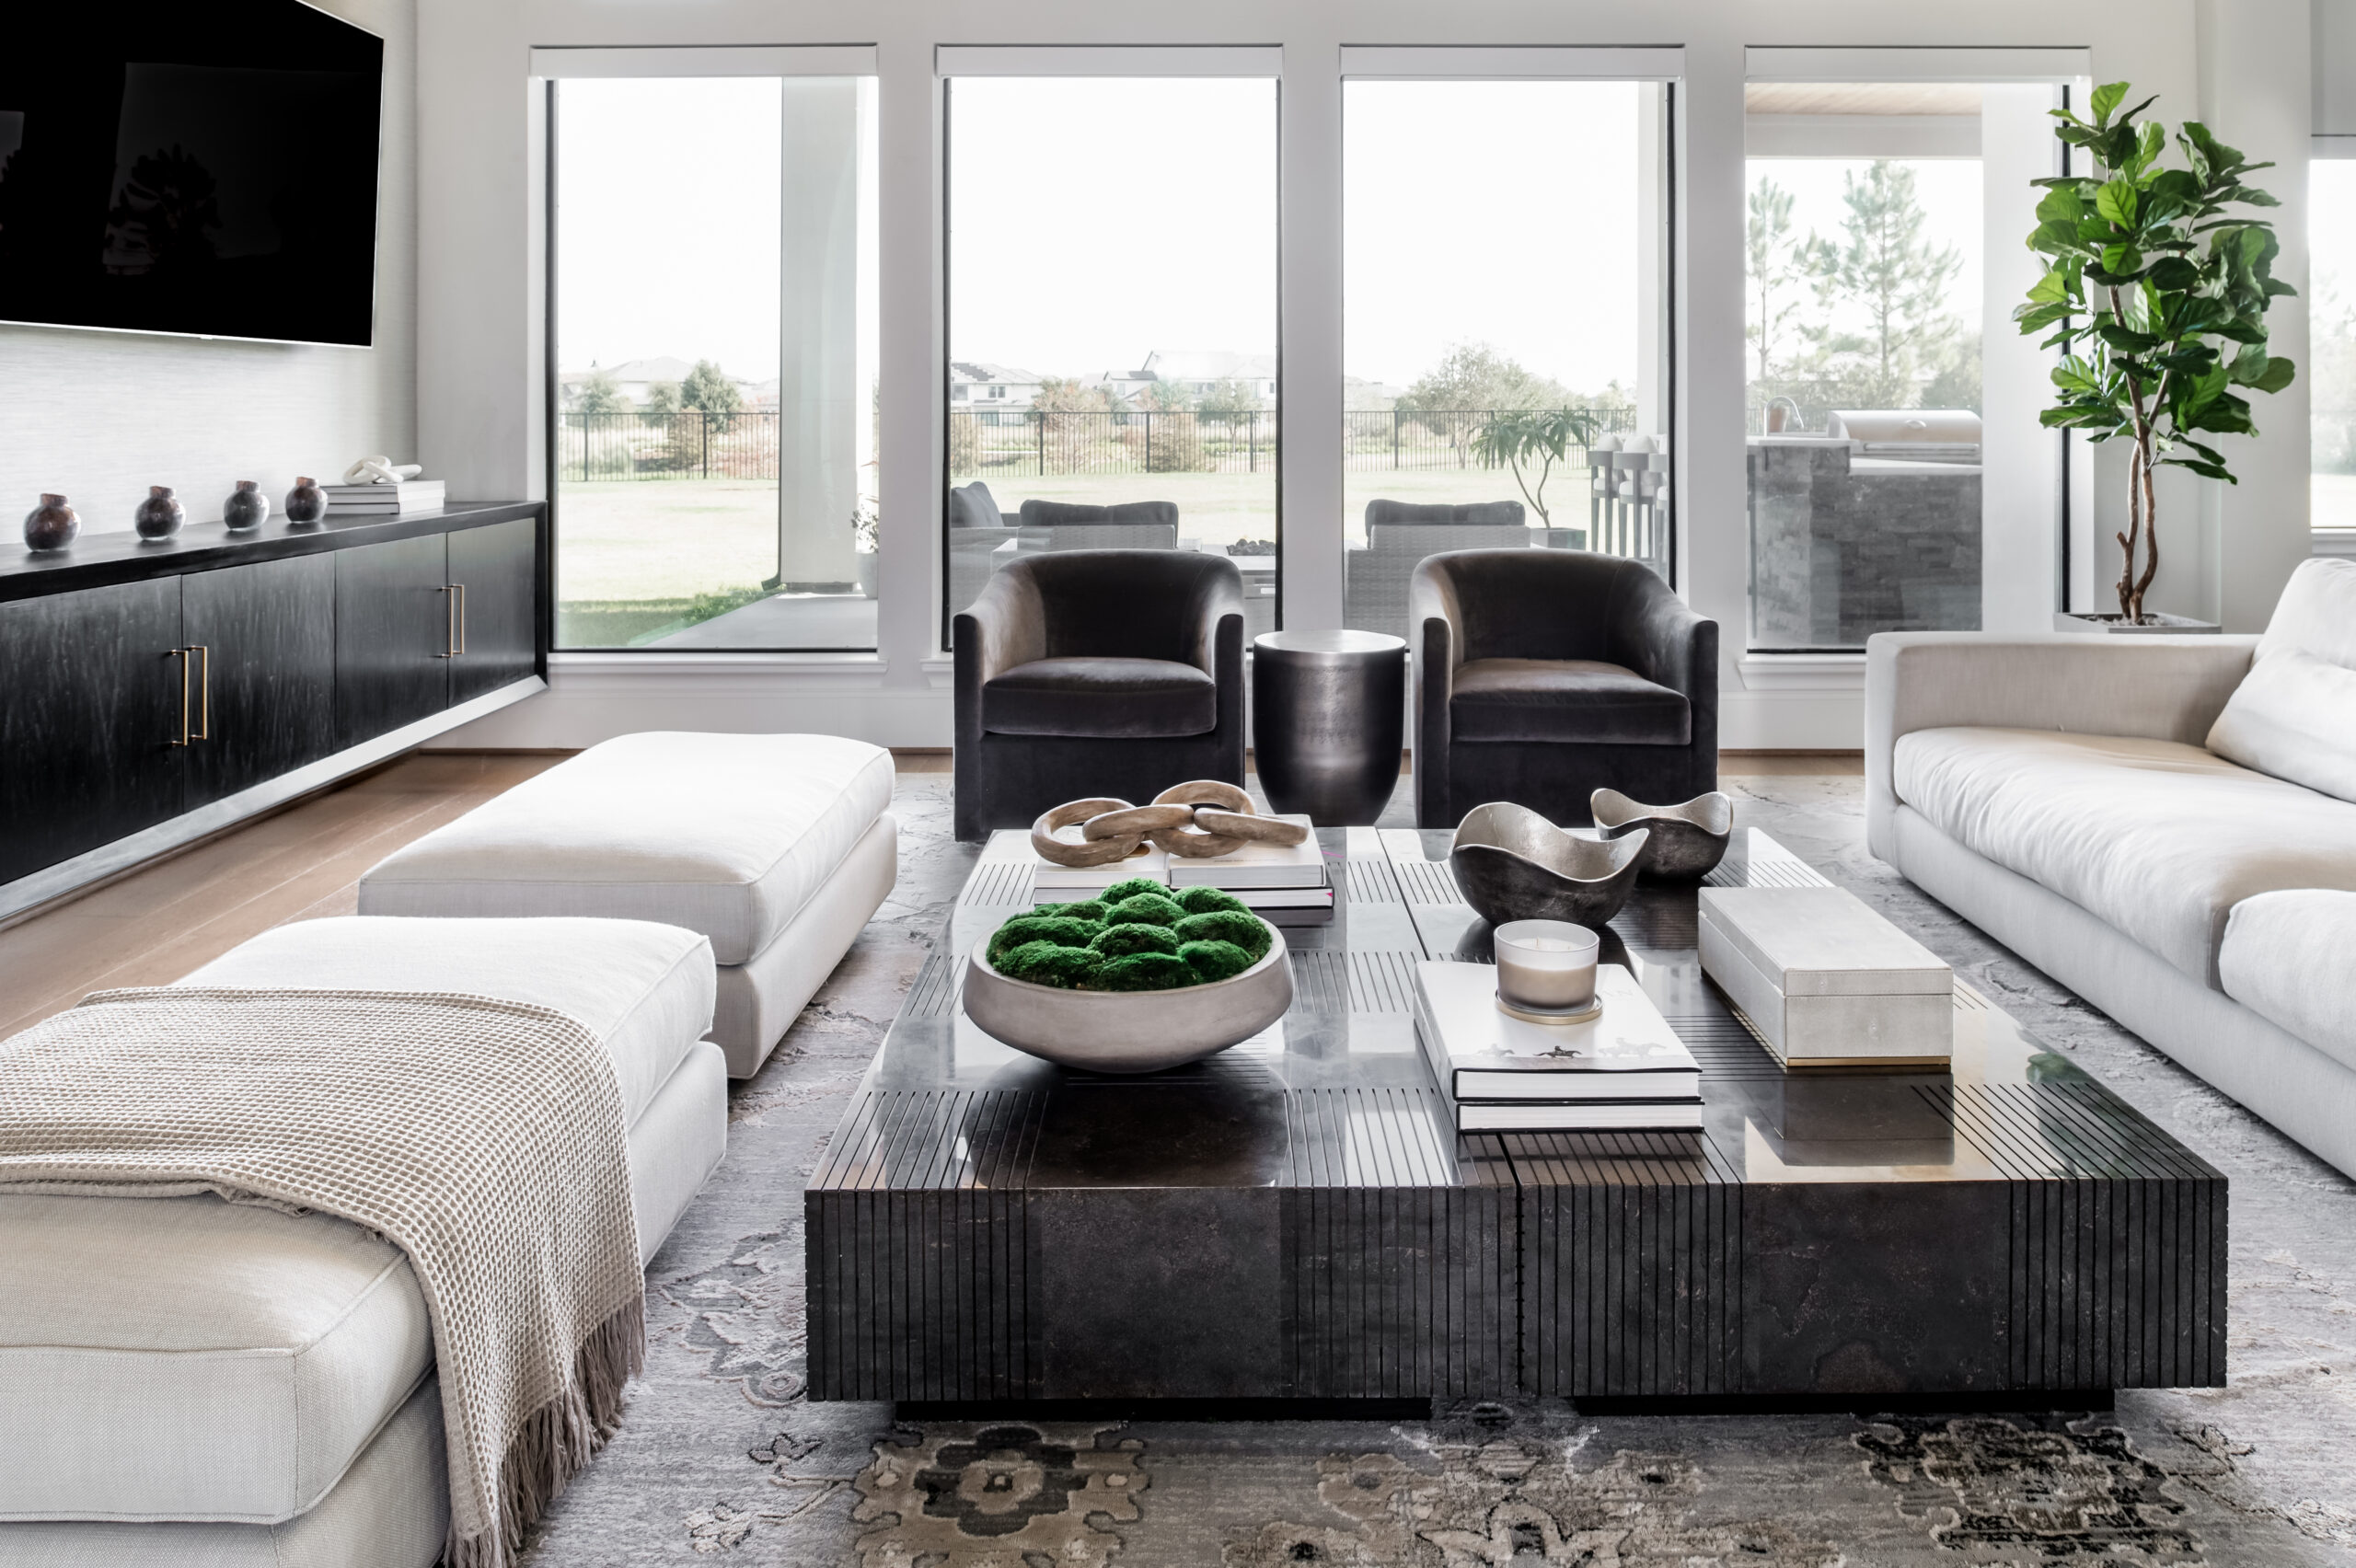 Living room interior design with modern interior design furniture and decor